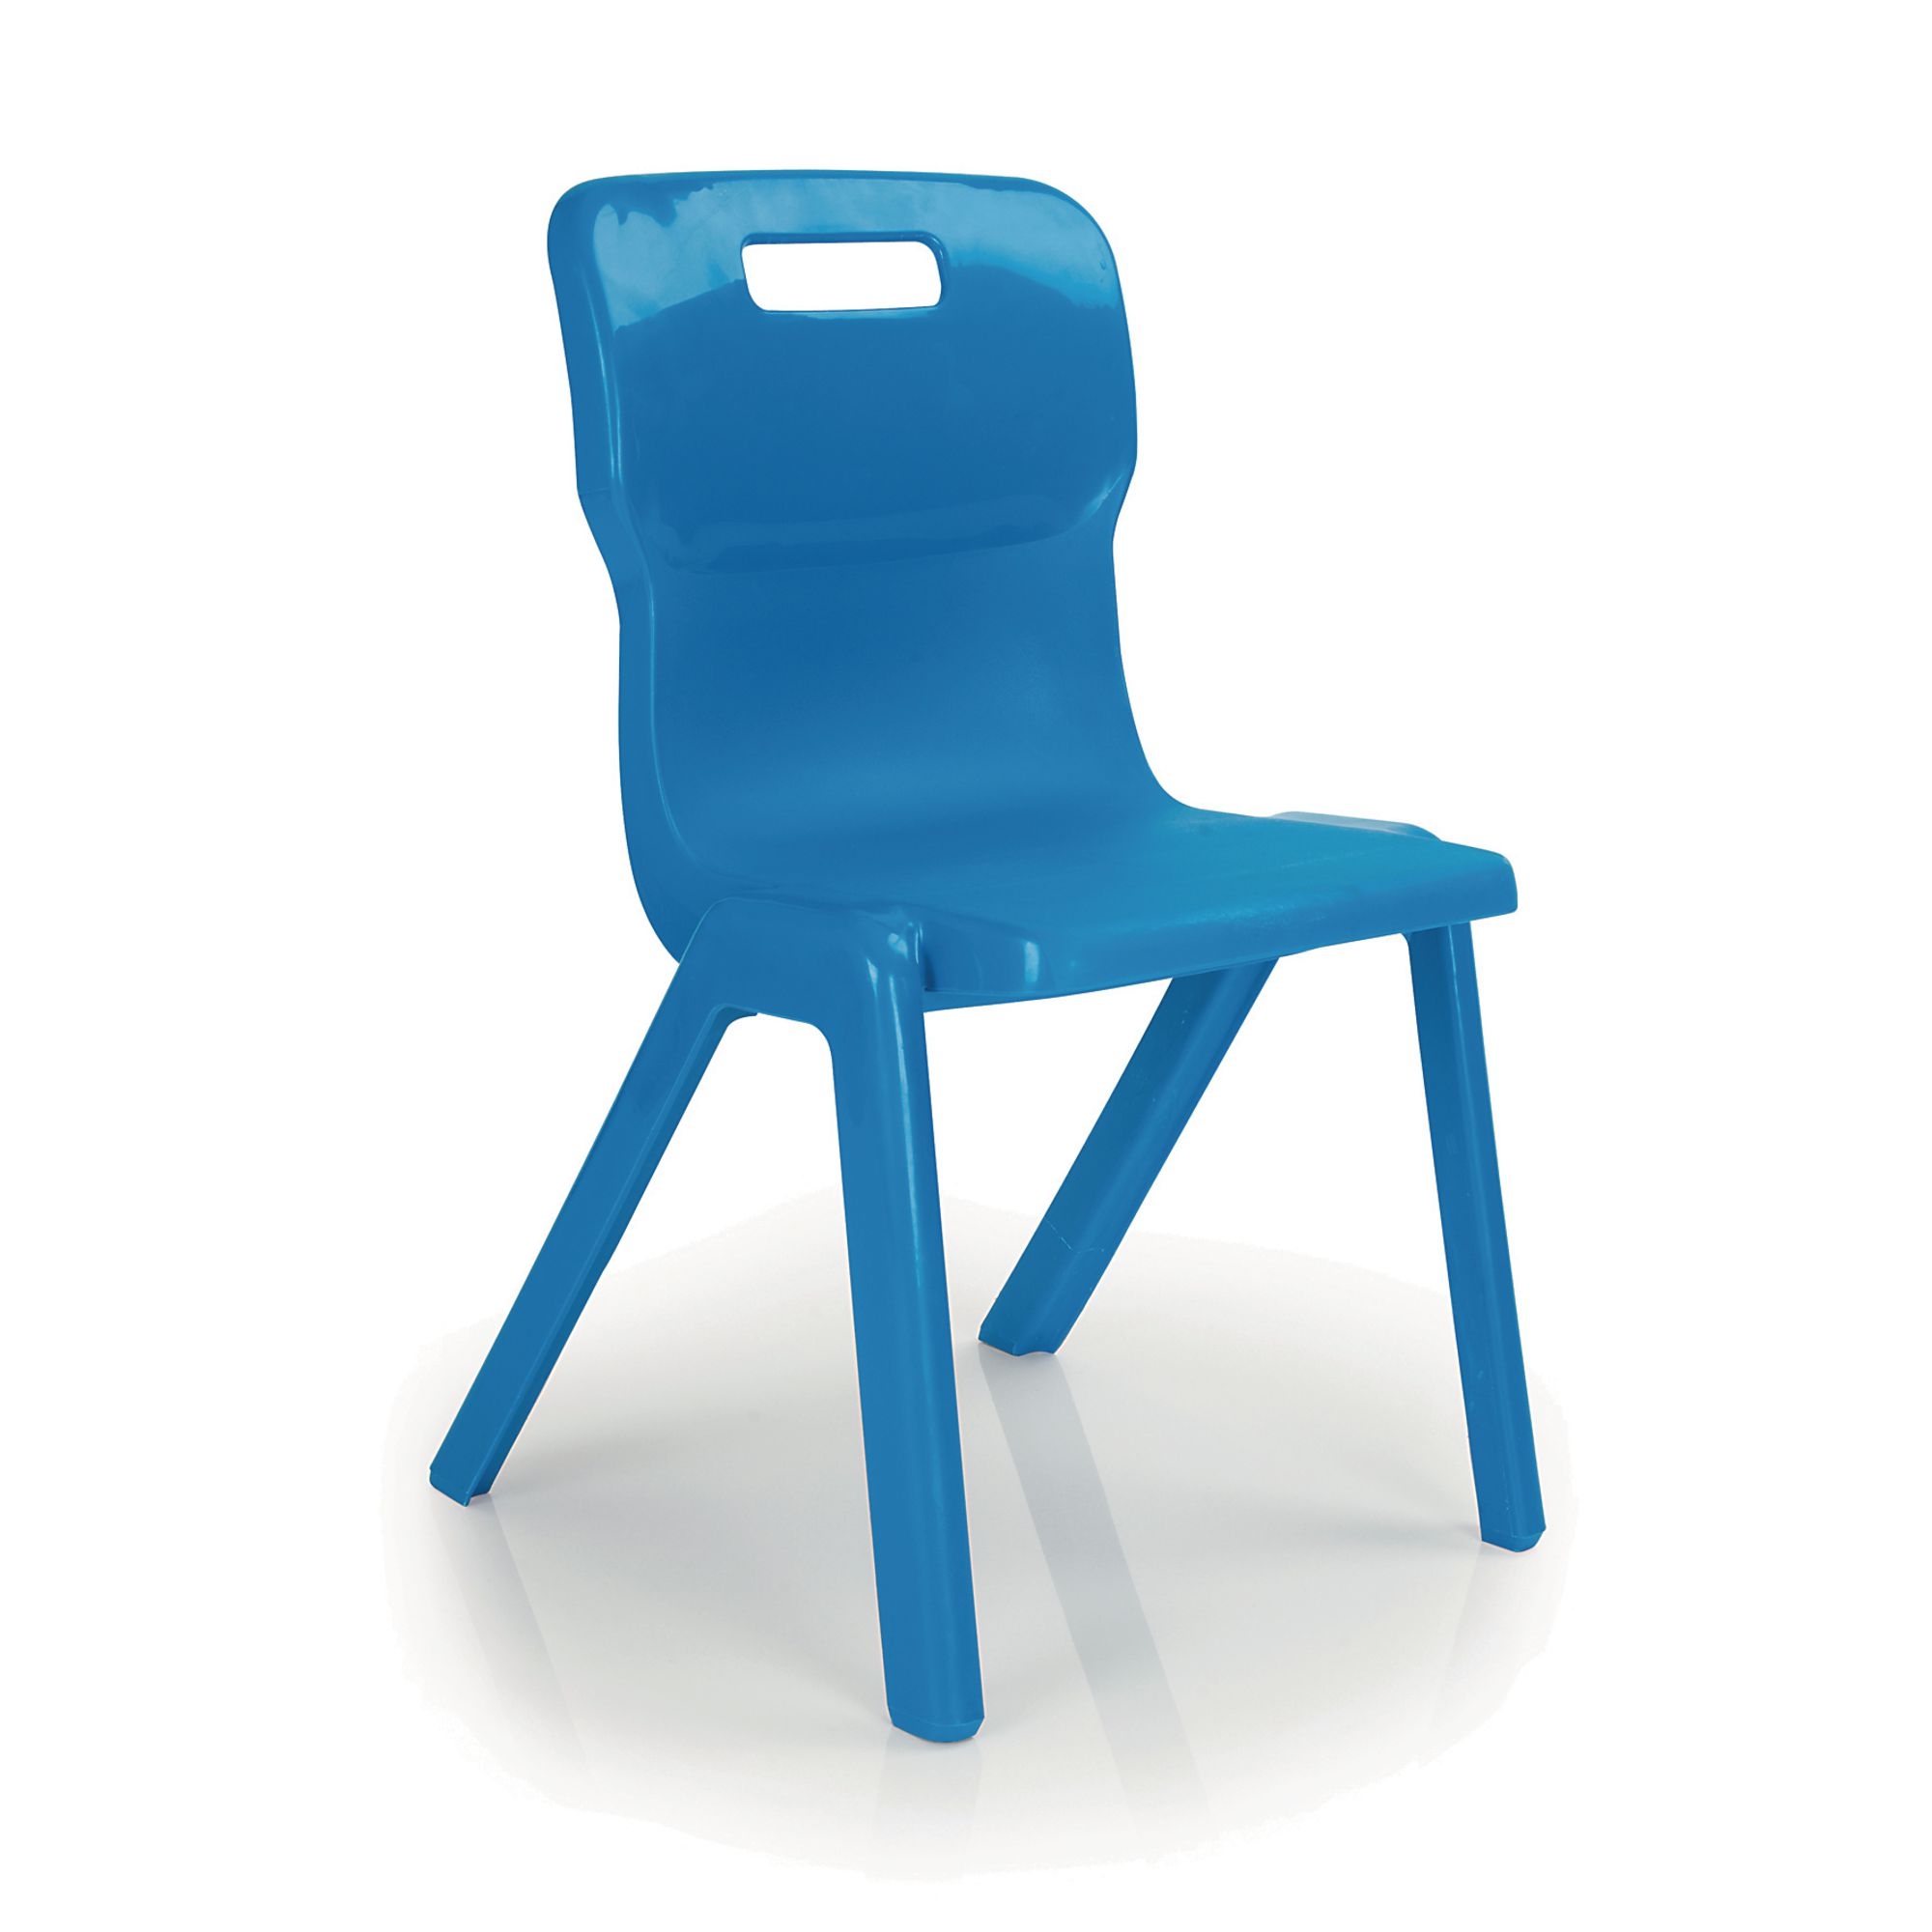 One Piece Titan Chair - Size 4 Ages 8-11 Blue